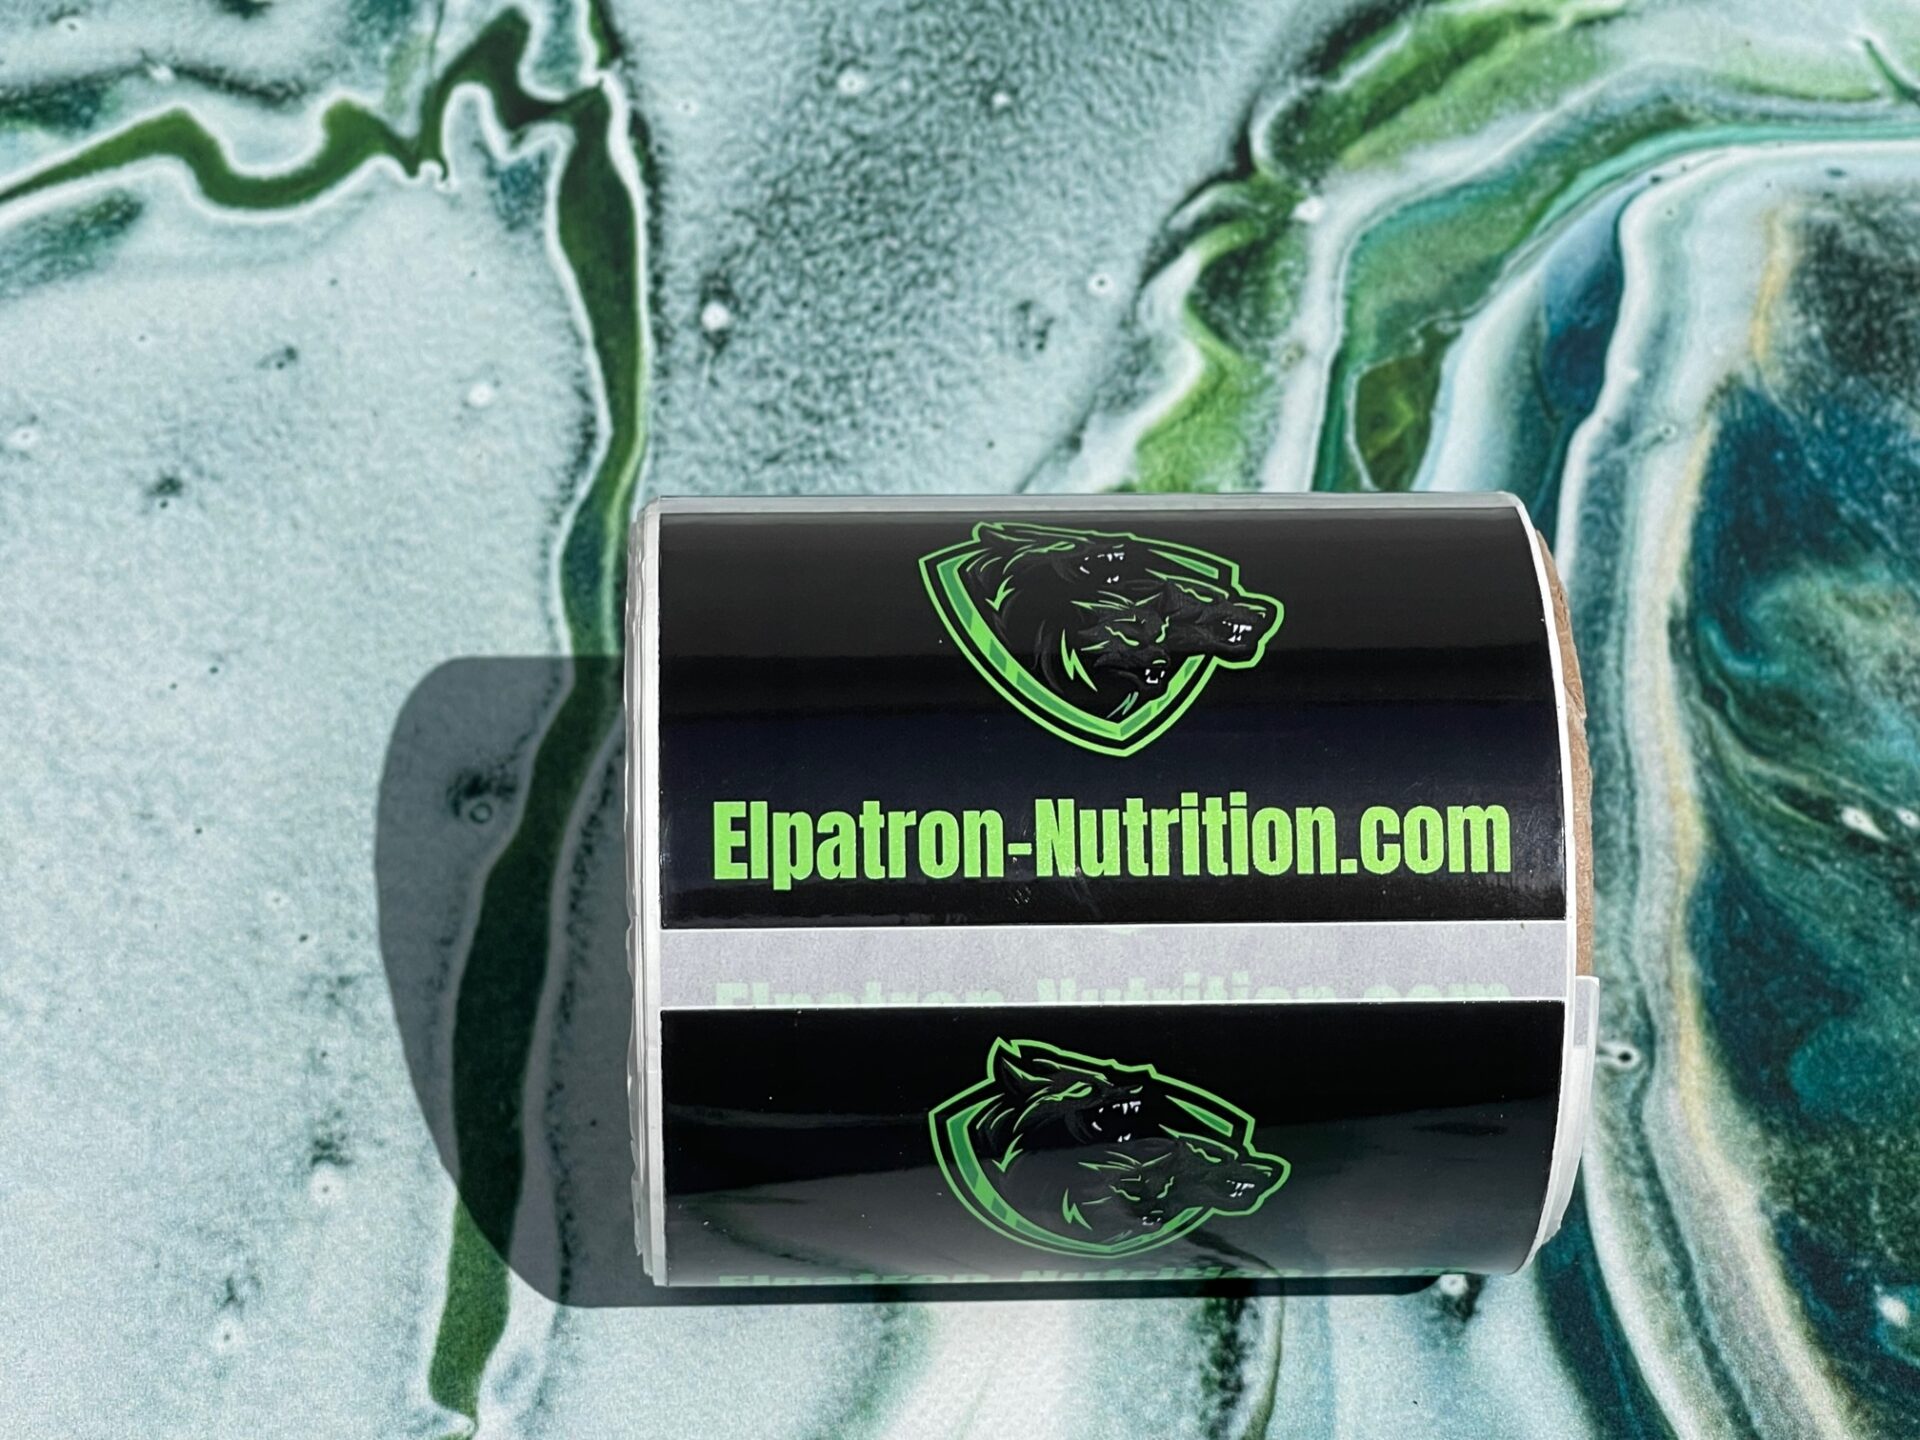 Elpatron Nutrition stickers